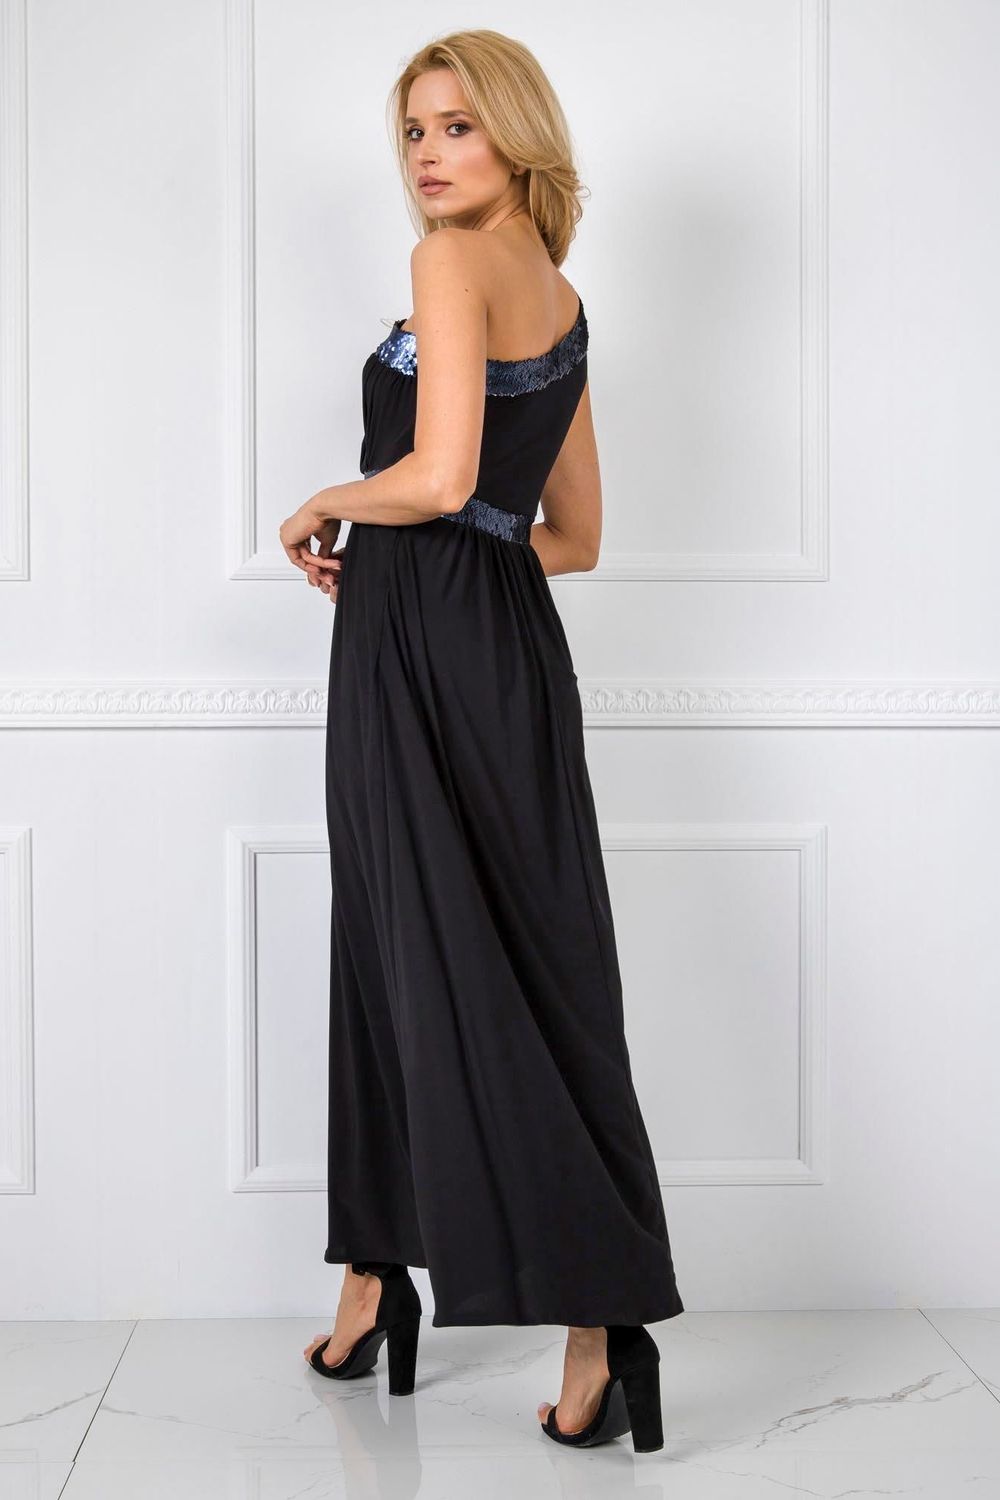 Evening dress model 161055 Elsy Style Evening Dresses